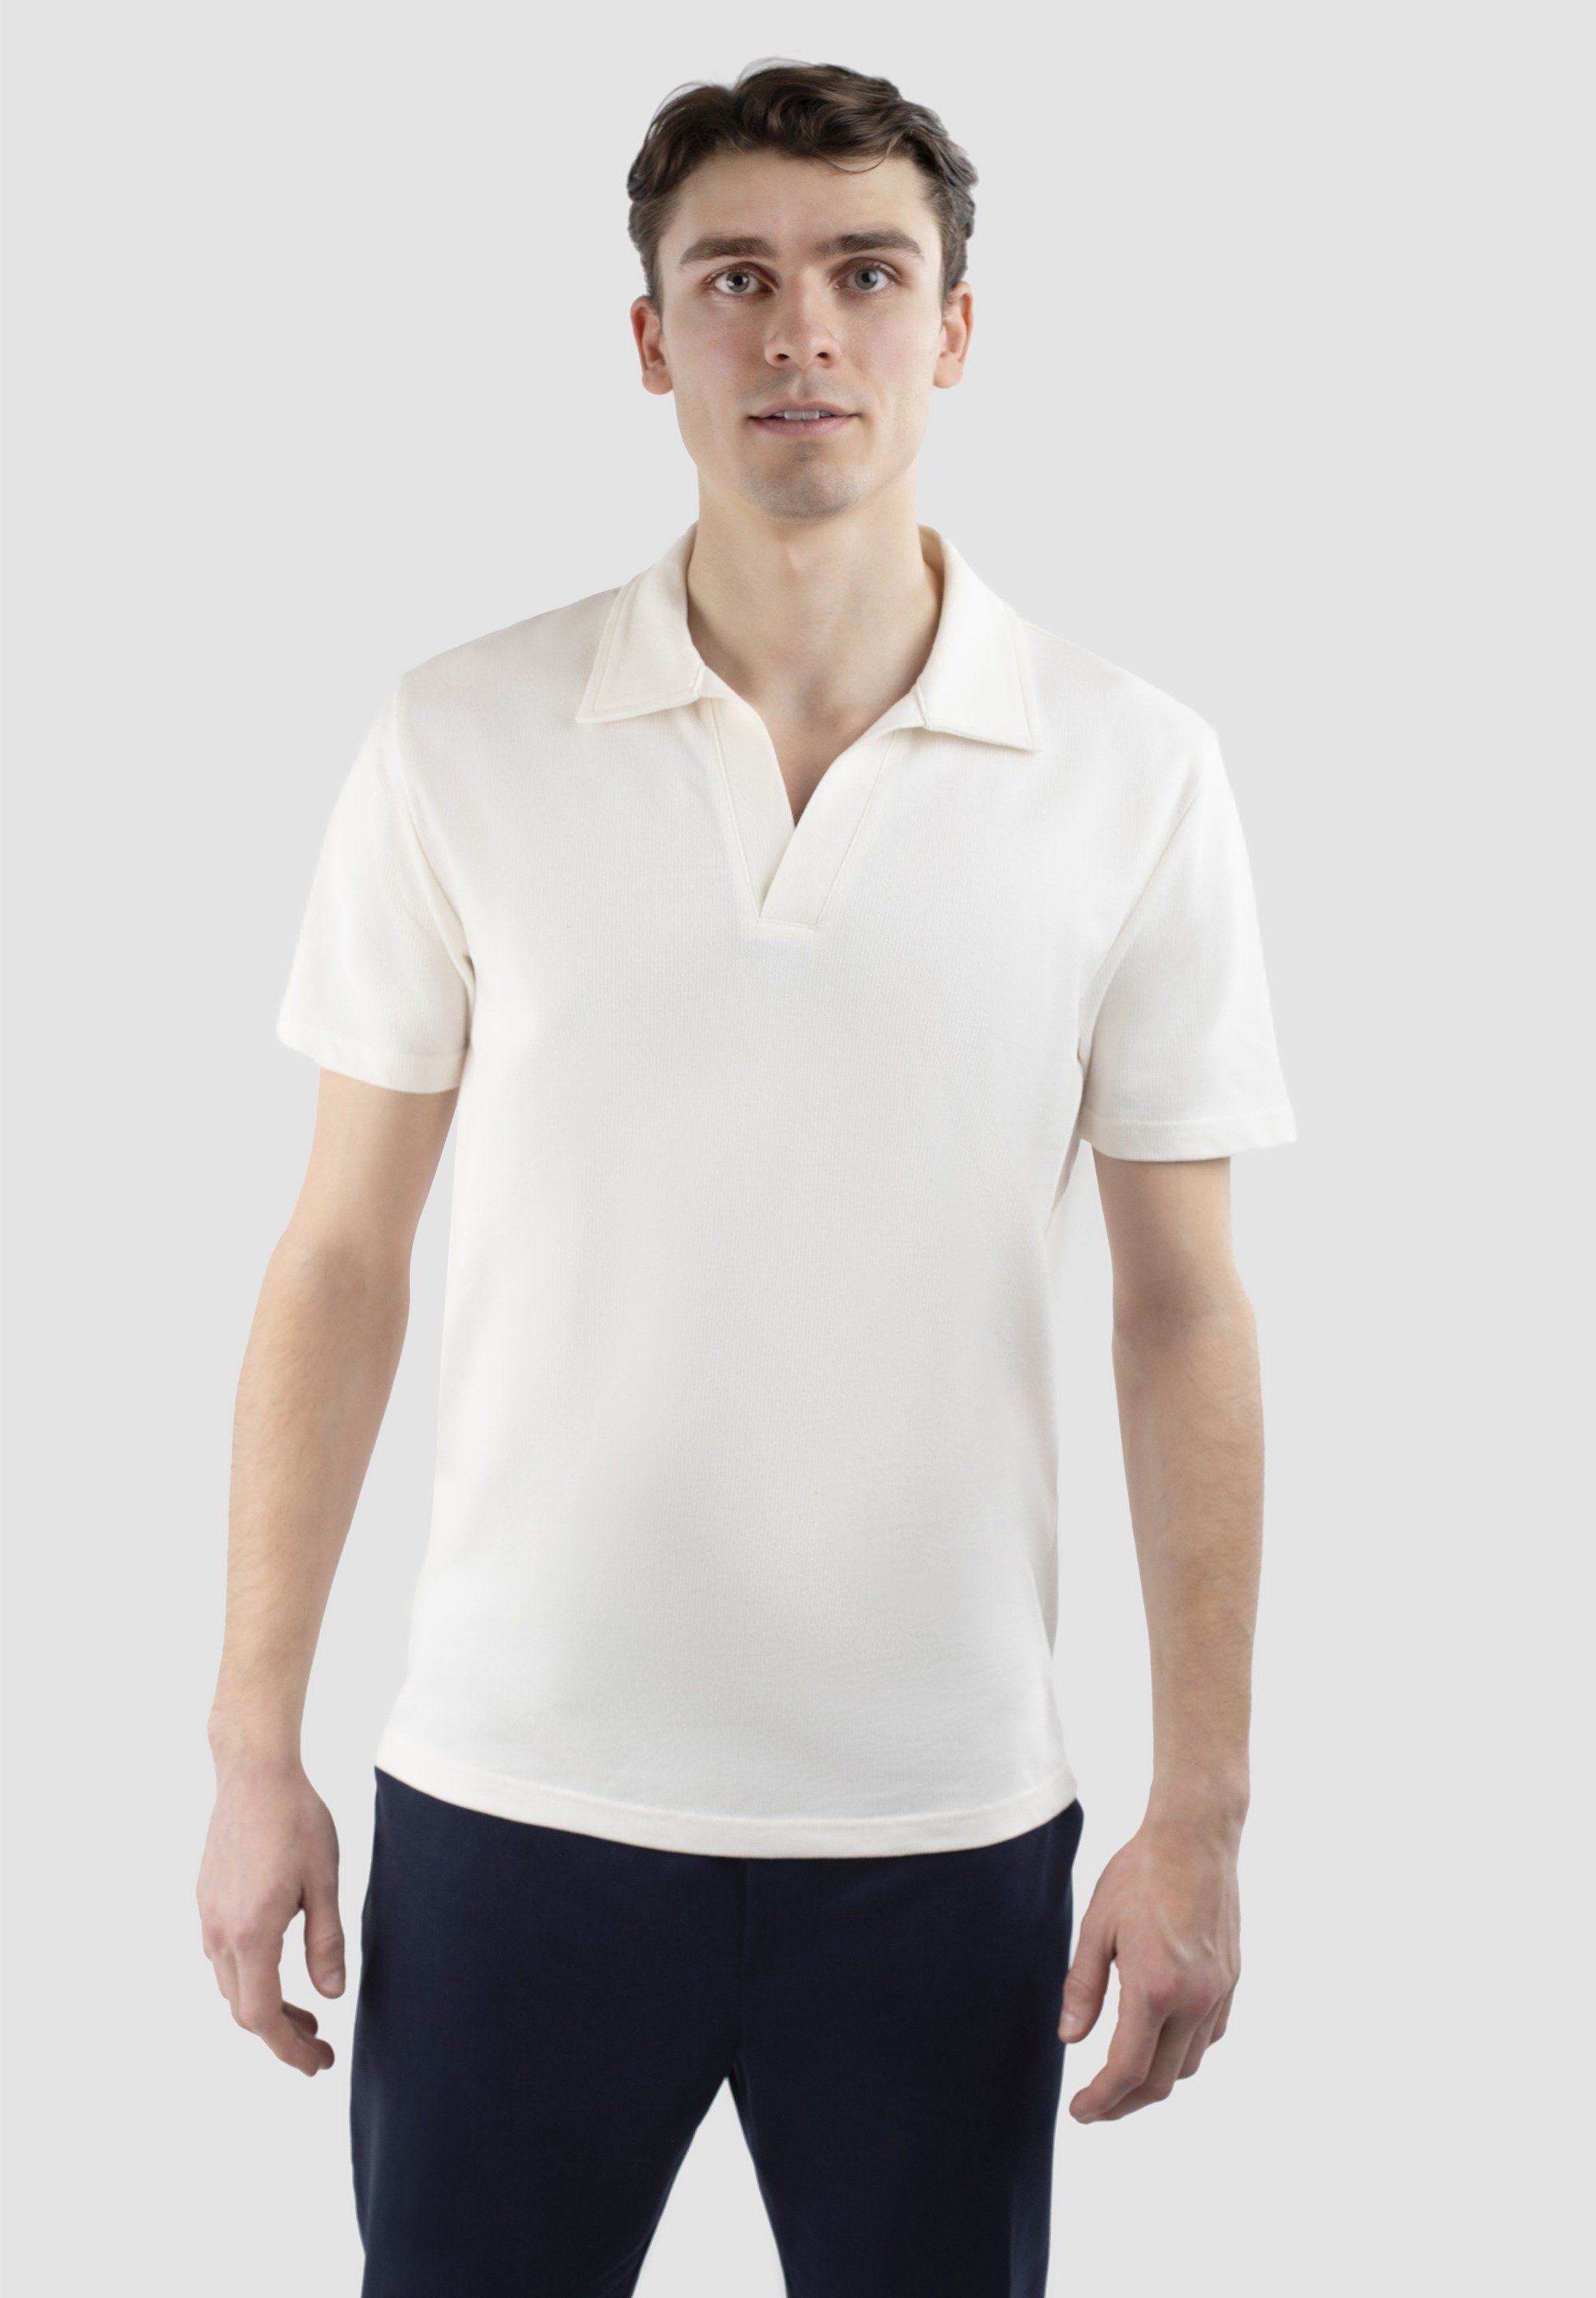 Ciszere Poloshirt Nelson Polo shirt with open collar. off-white